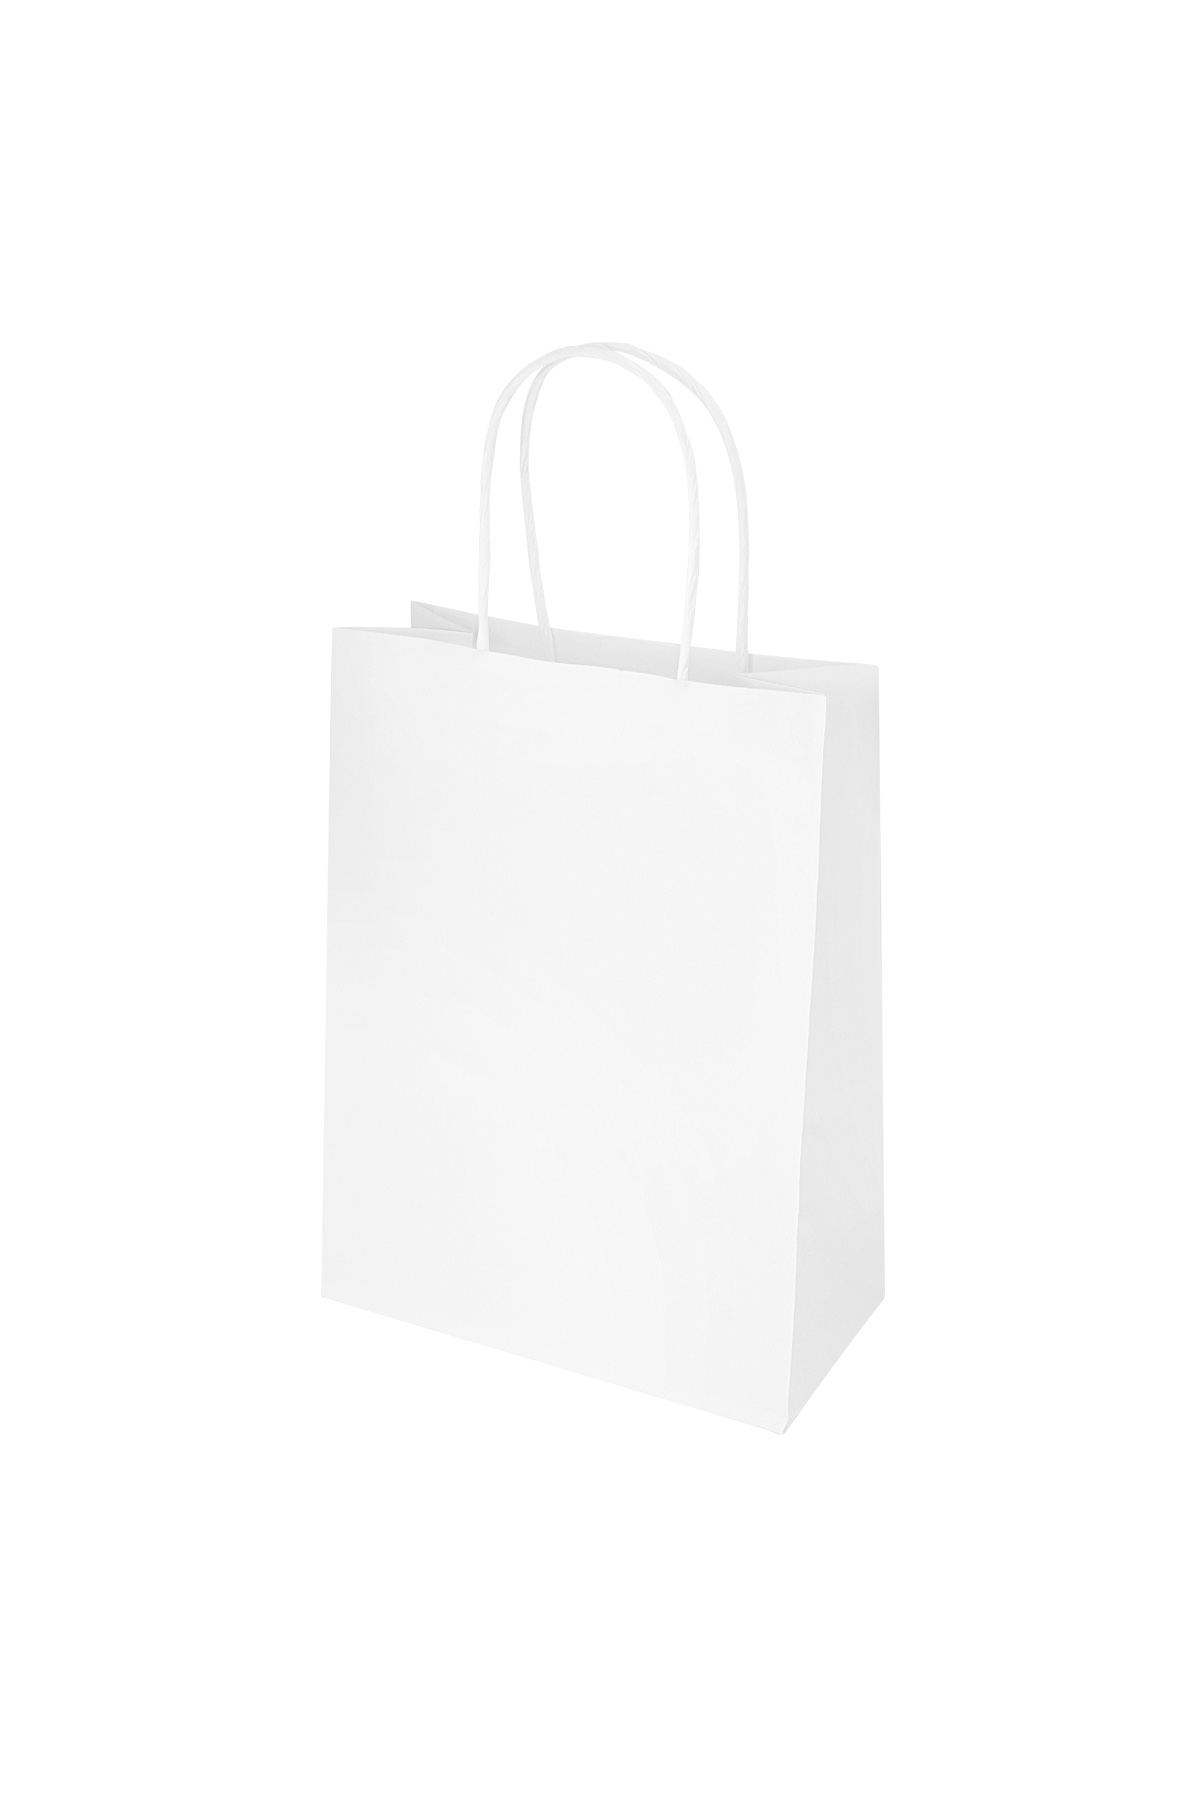 Bags plain 50 pieces small - white Paper h5 